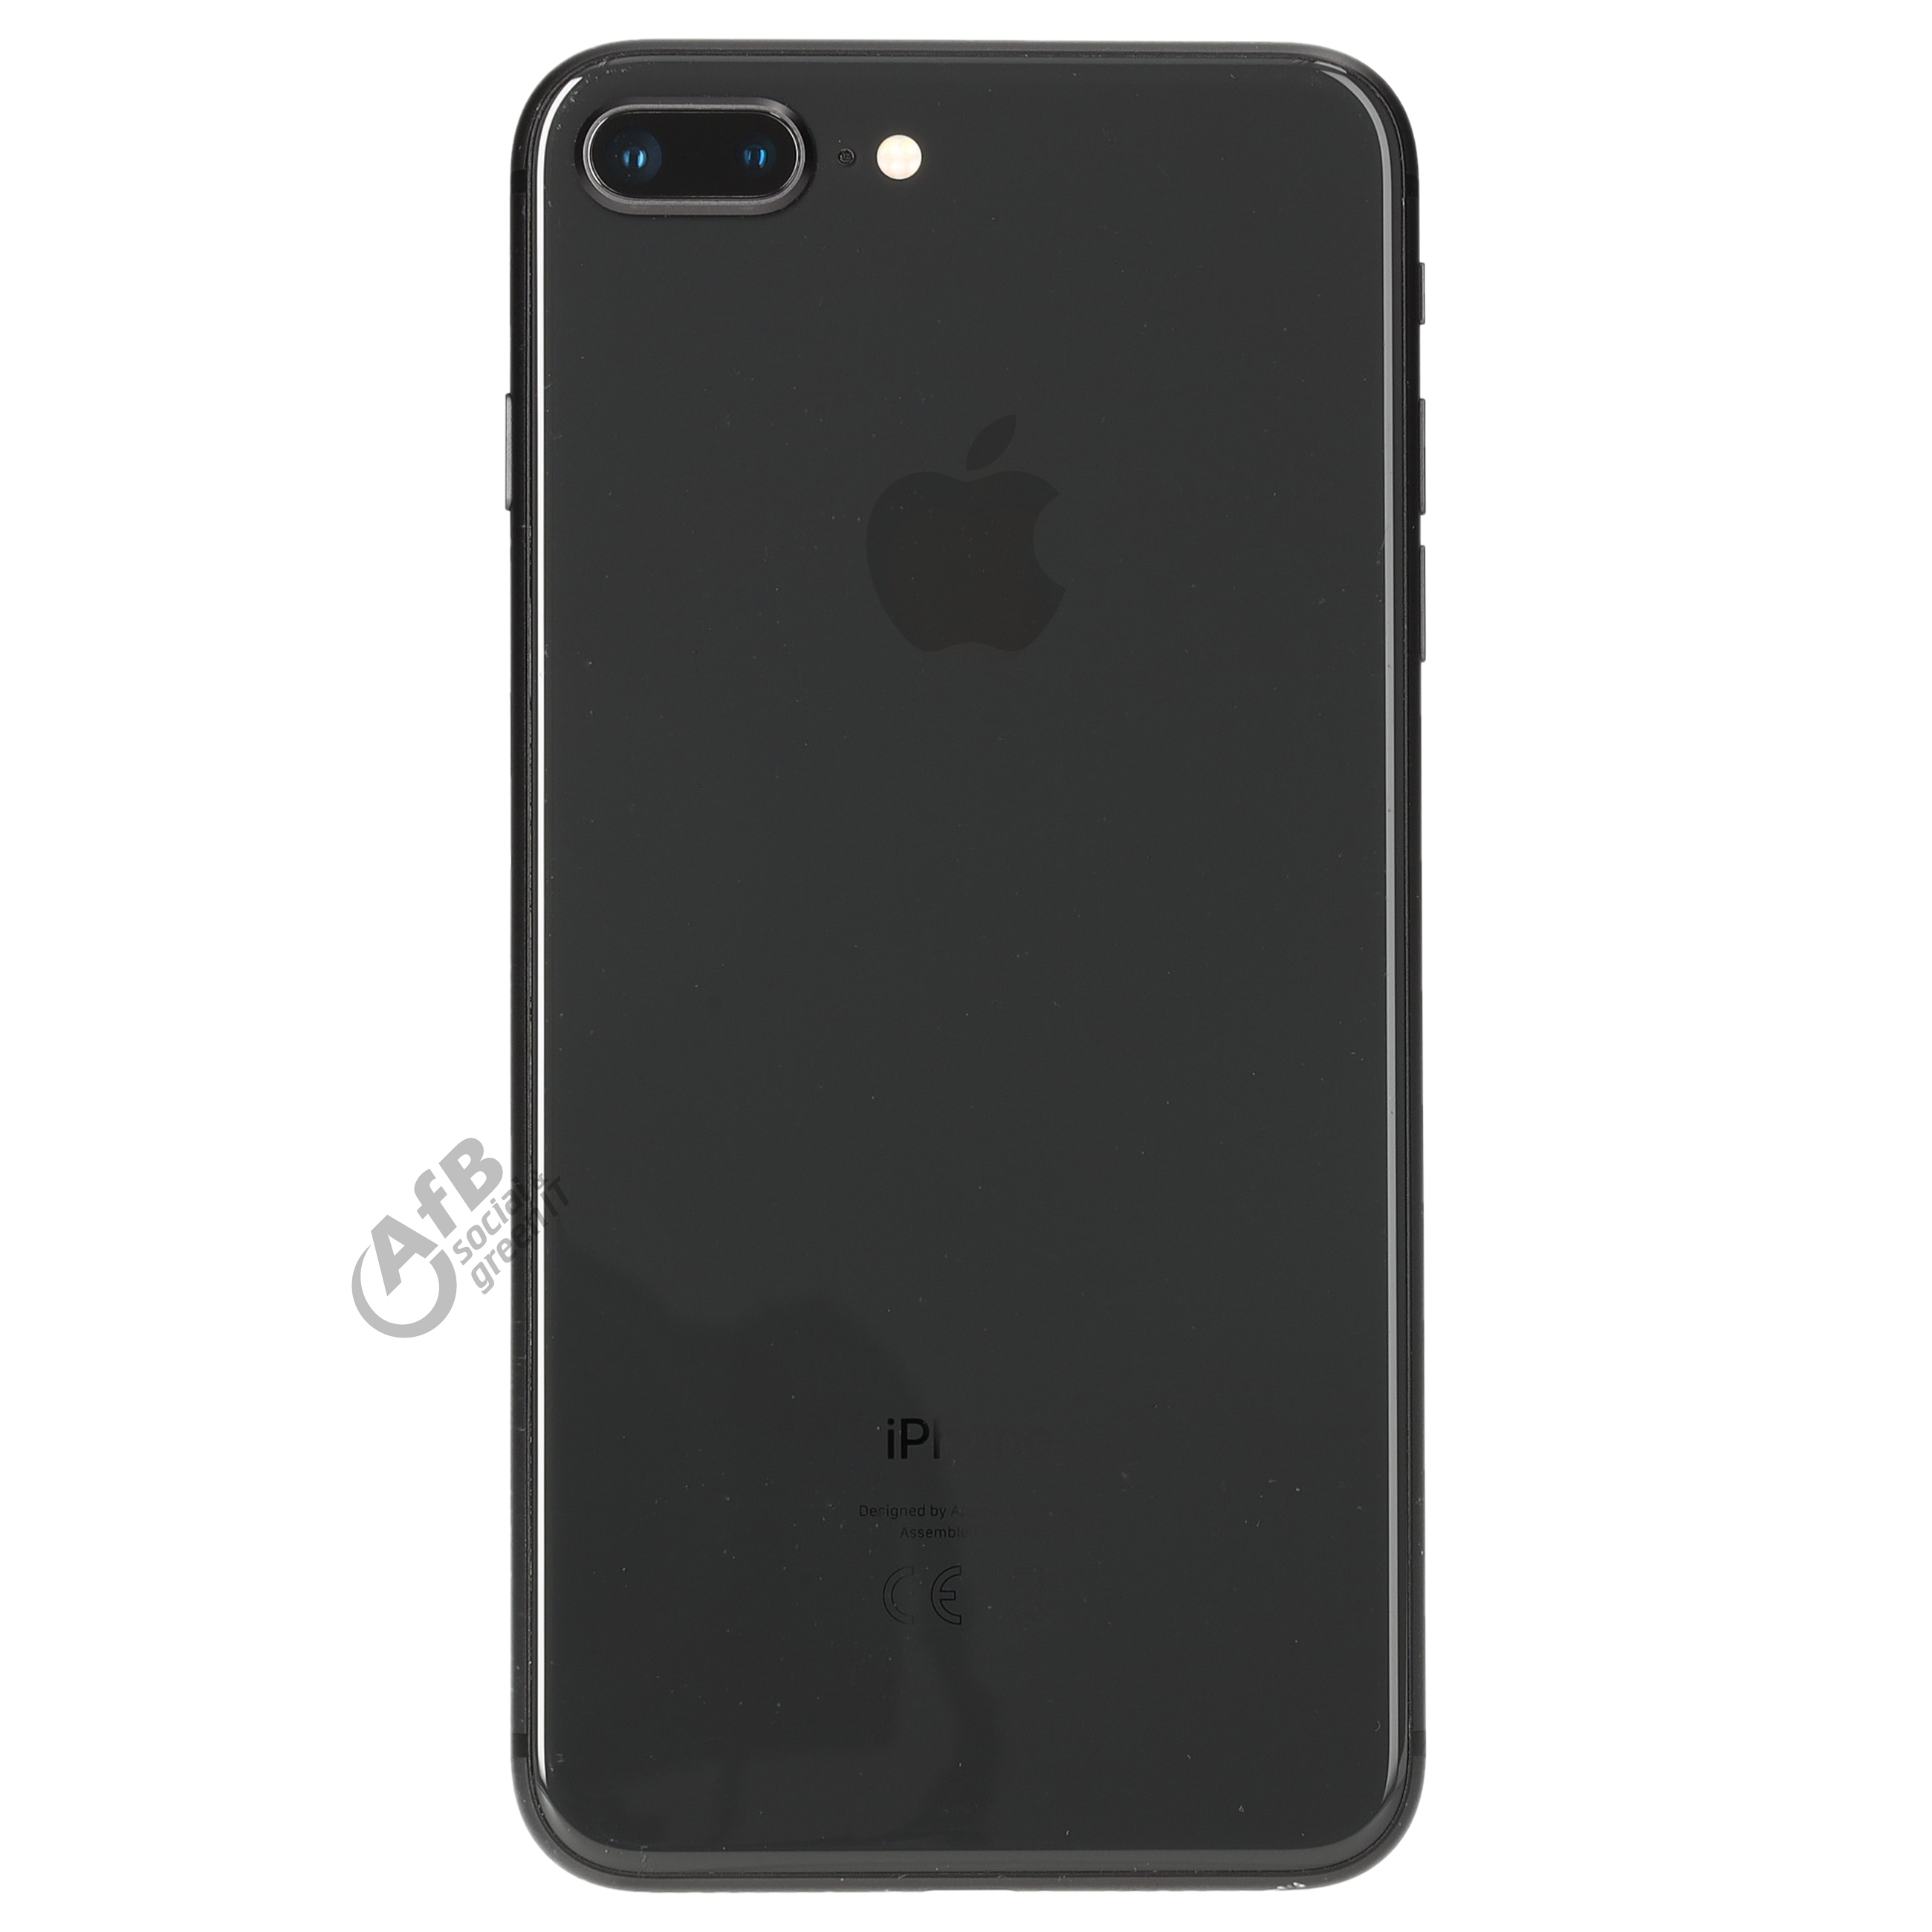 Apple iPhone 8 Plus - 64 GB - Space Gray - Single-SIM